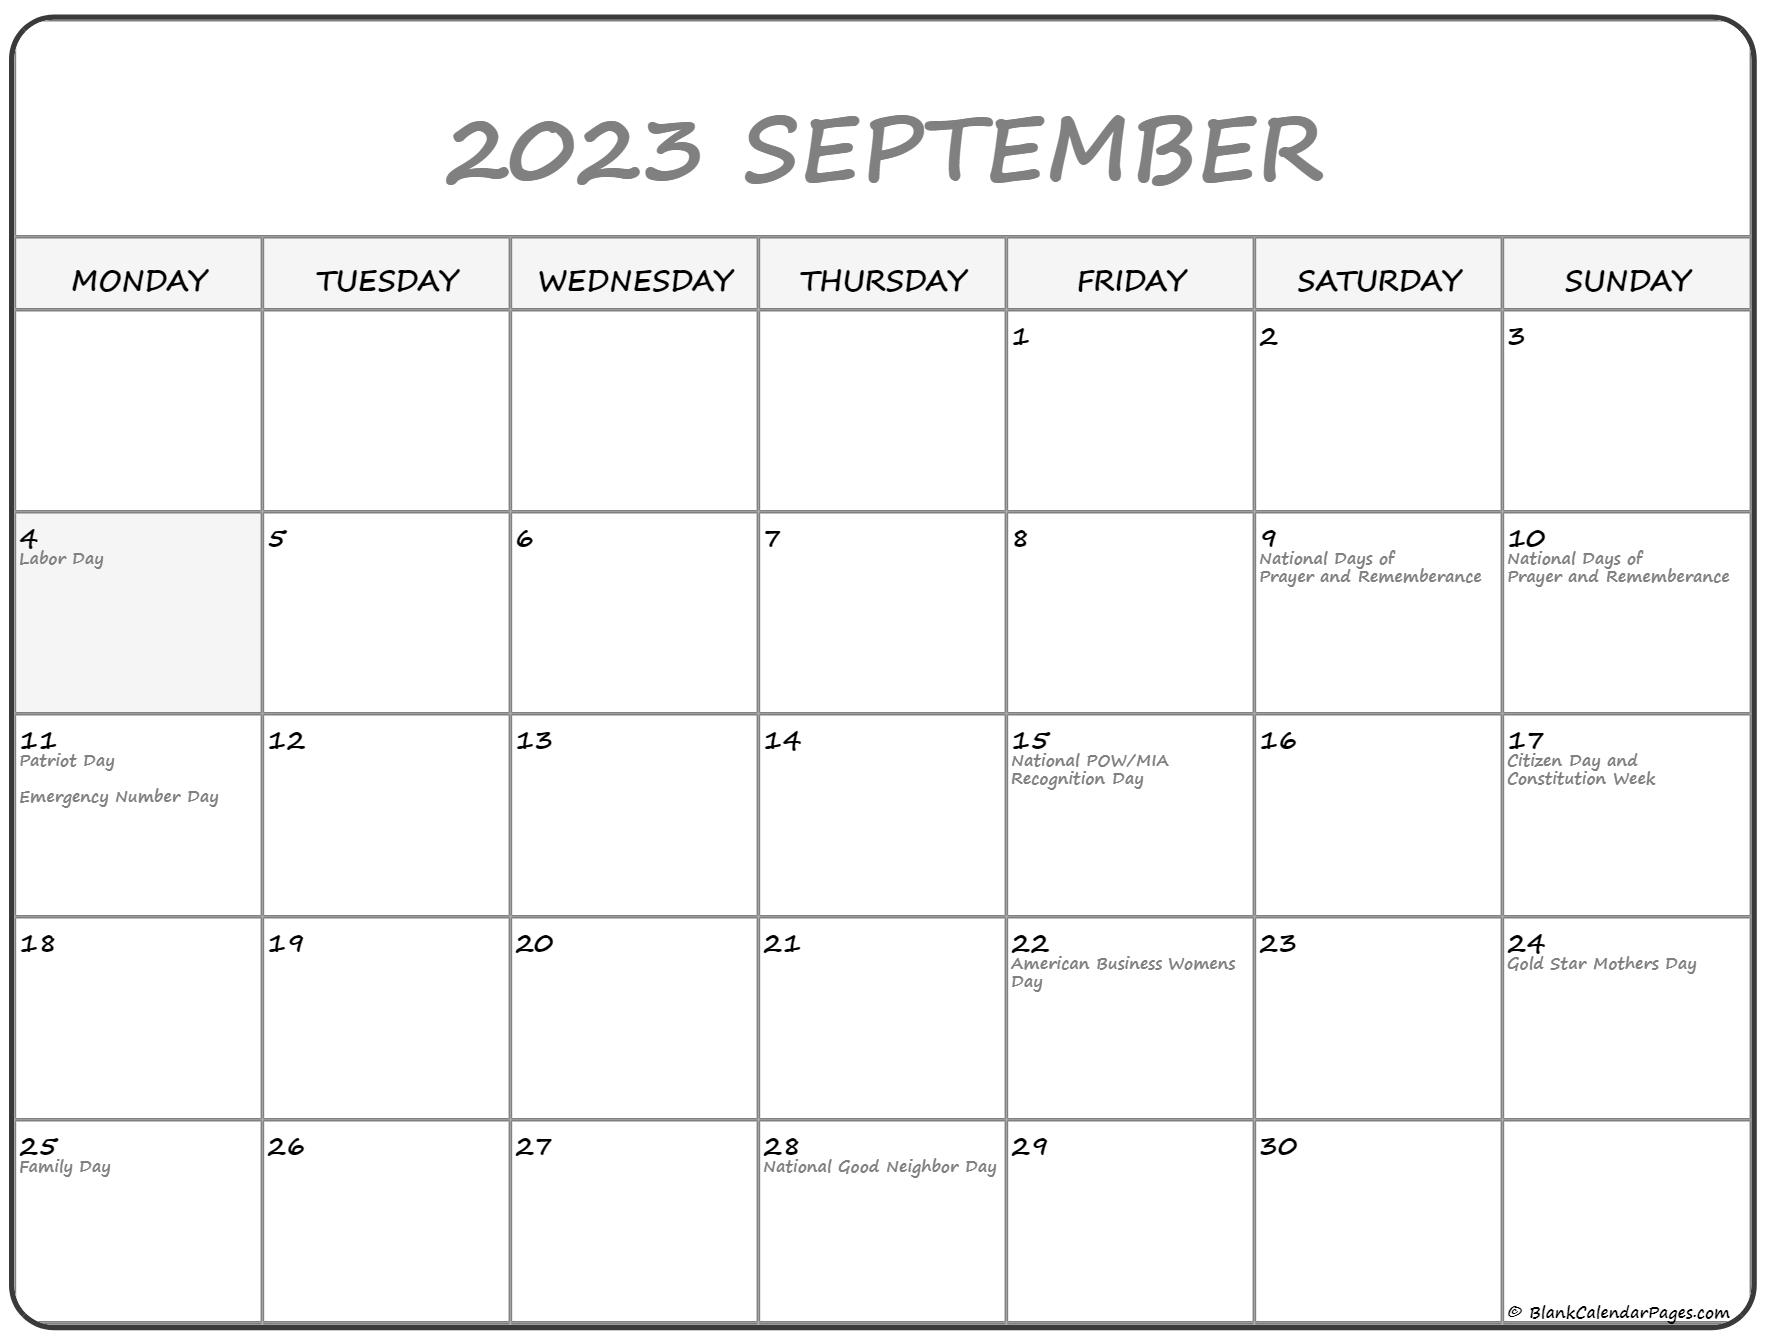 September 2023 Monday Calendar | Monday to Sunday